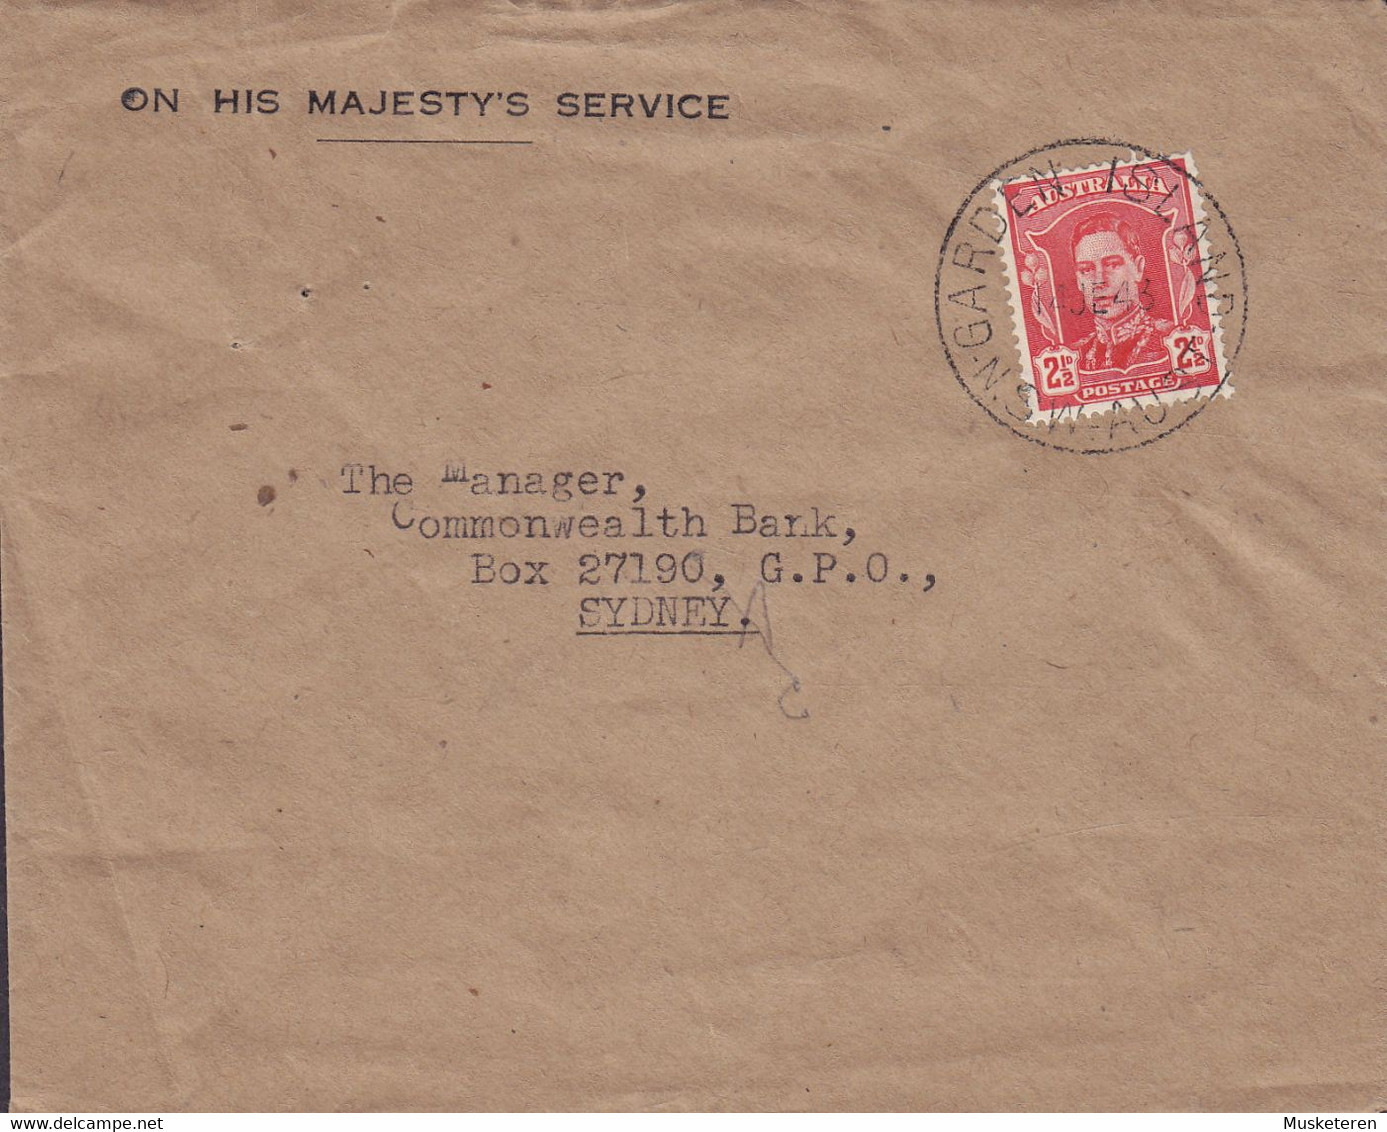 Australia ON HIS MAJESTY's SERVICE Naval Base GARDEN ISLAND 1943 Cover Brief Commonwealth Bank Of Australia SYDNEY - Servizio